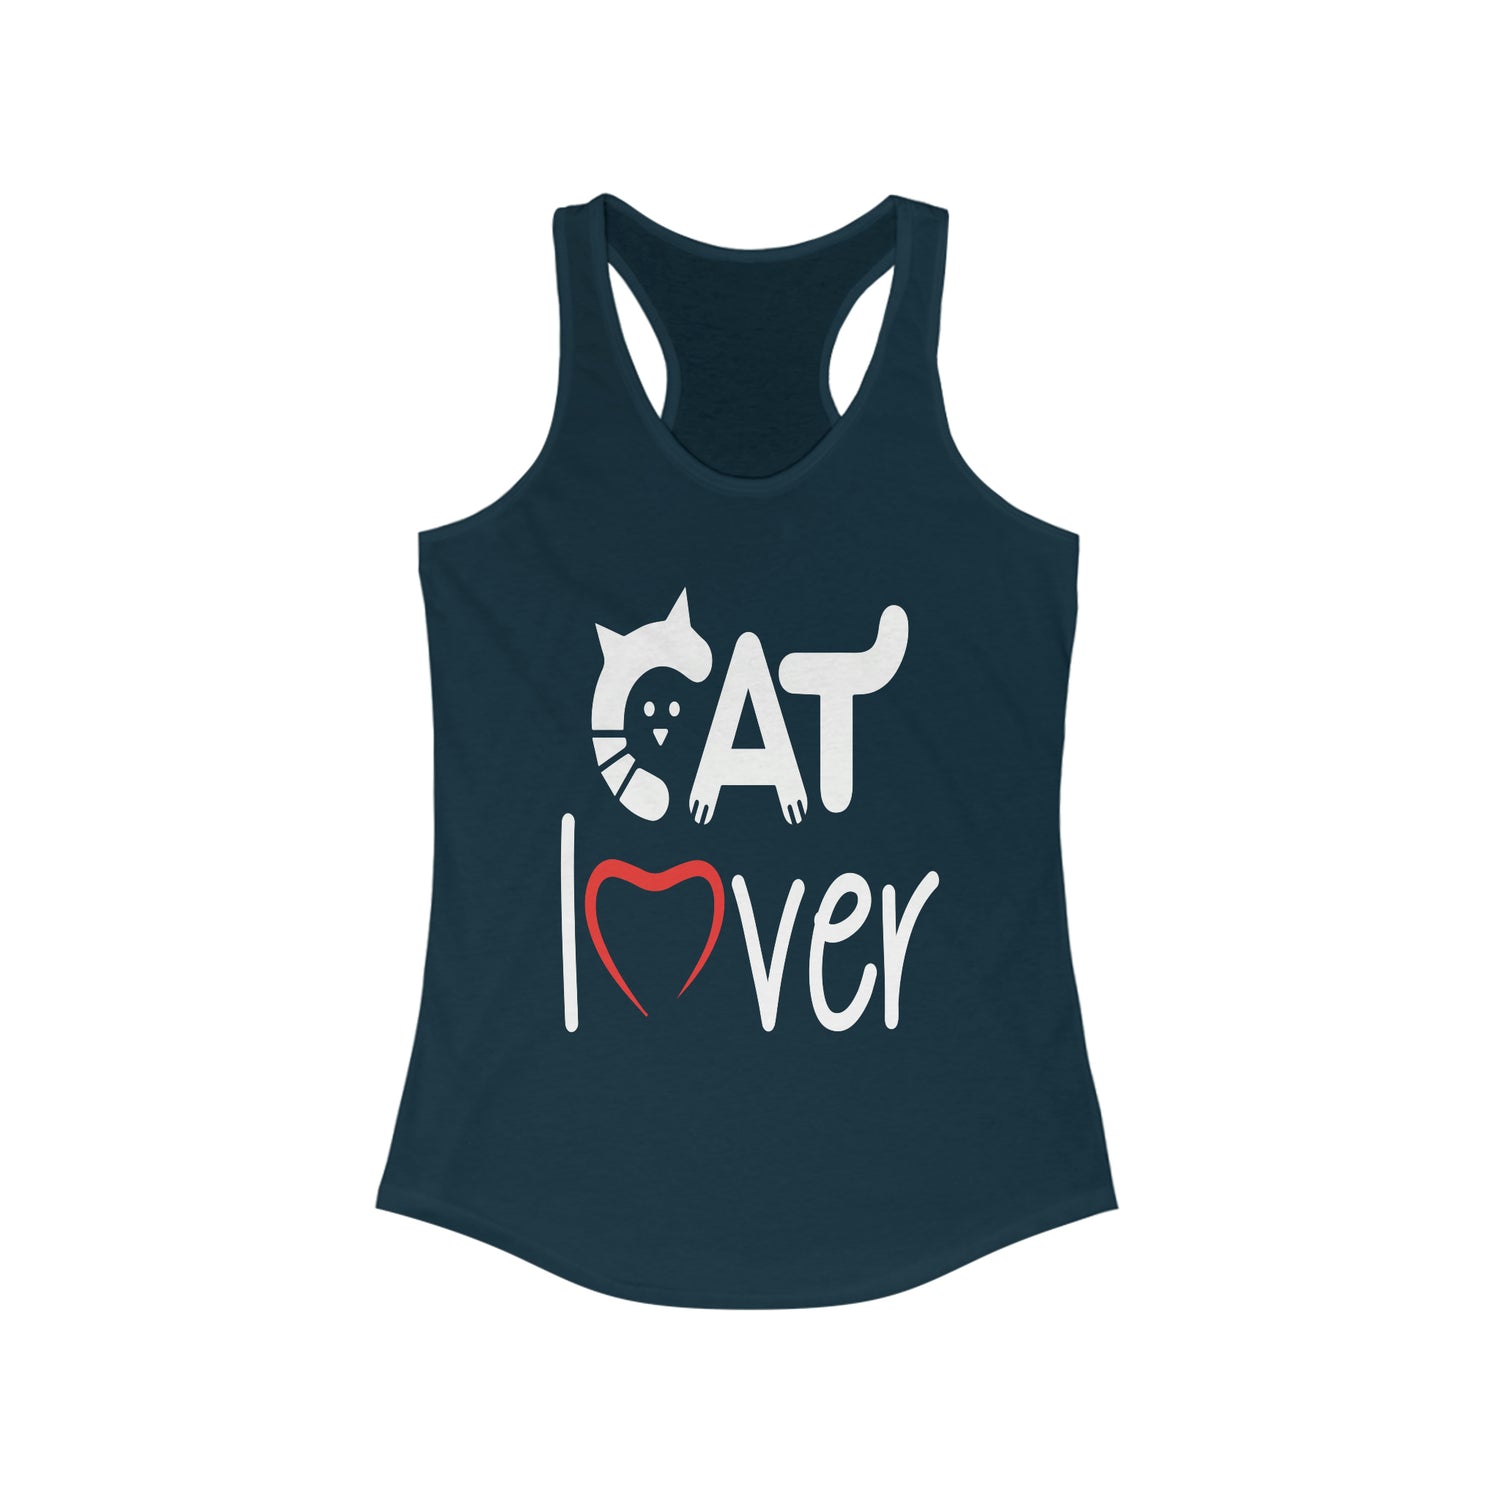 Cat Lover - Racerback Tank Top